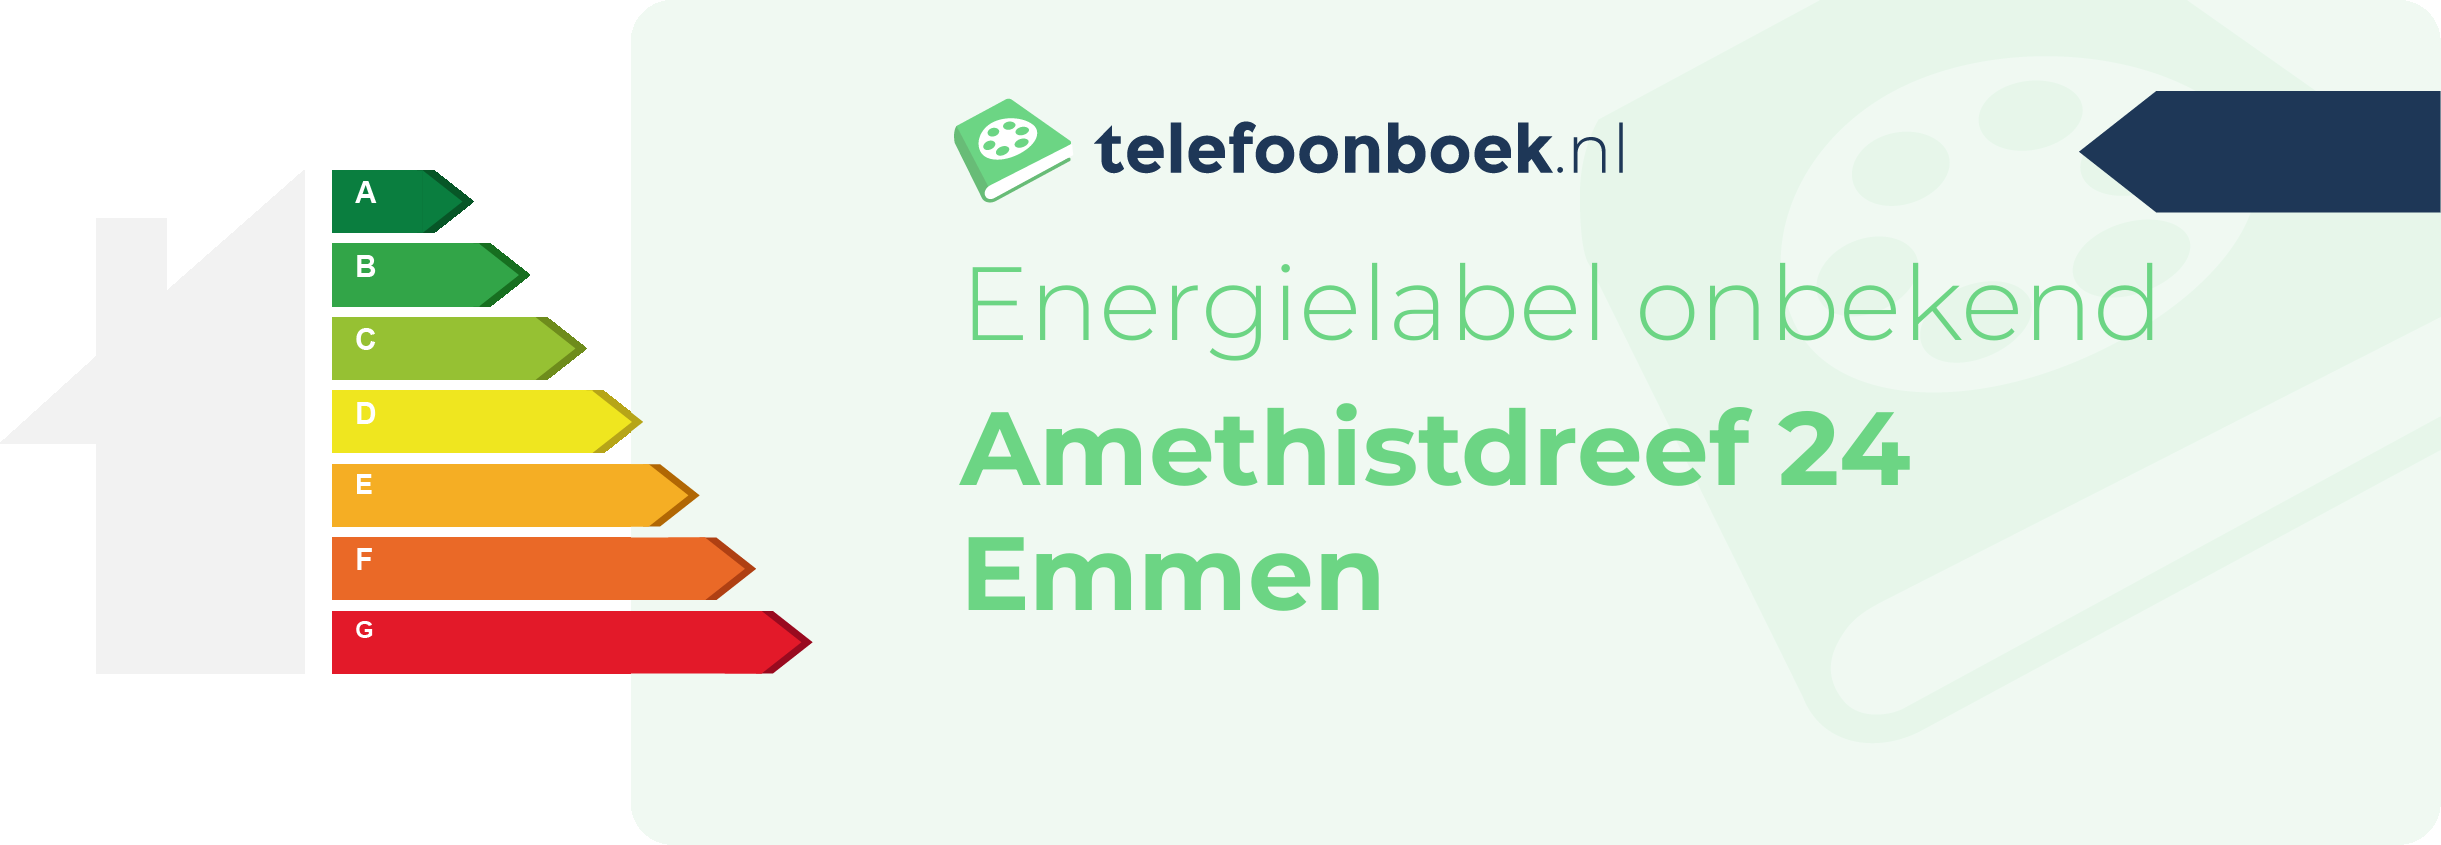 Energielabel Amethistdreef 24 Emmen